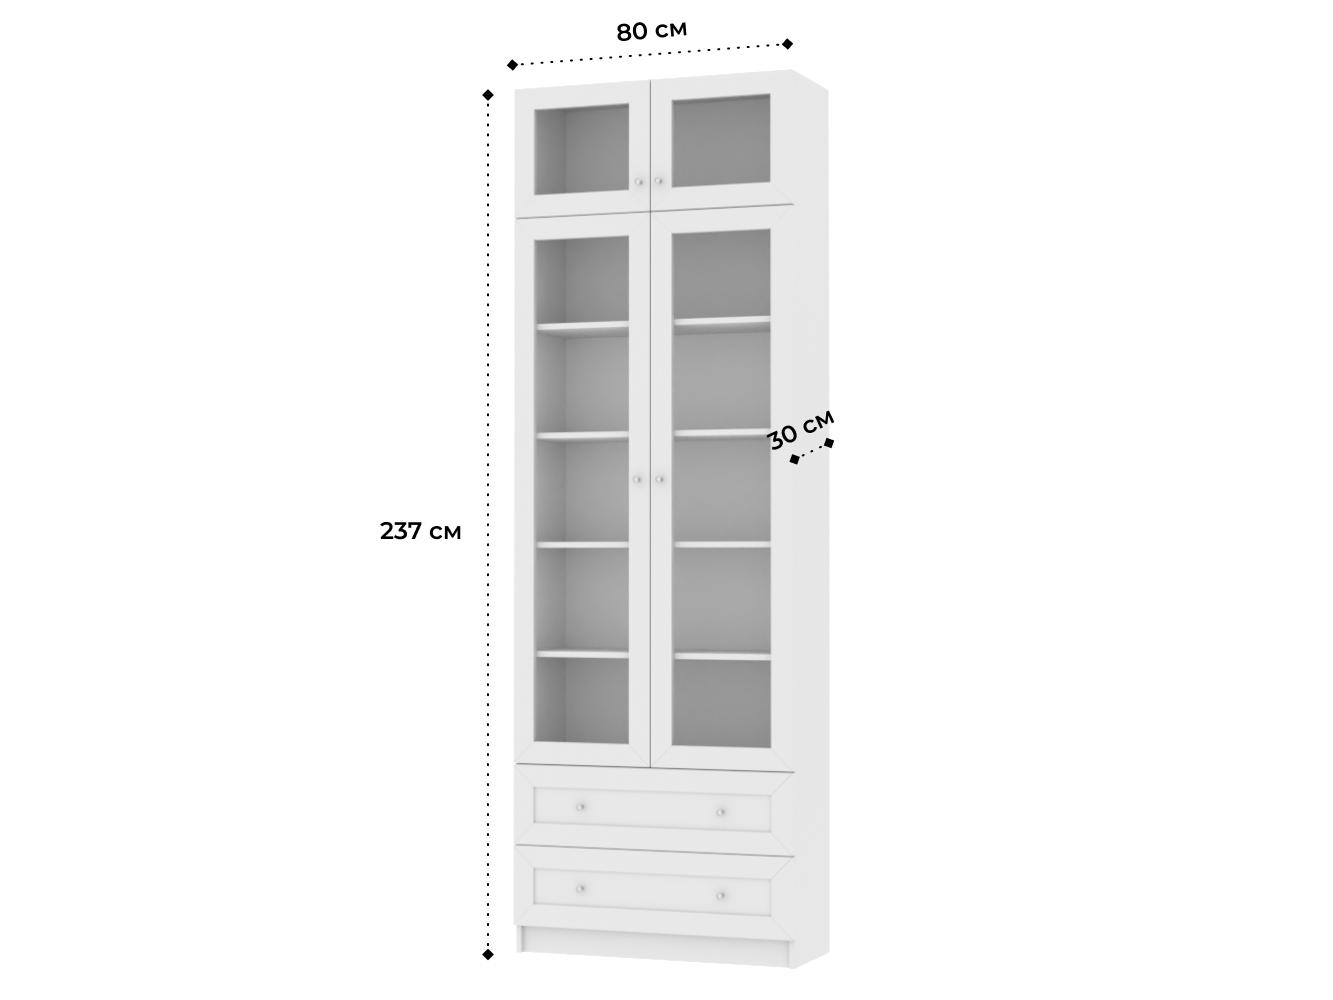  Книжный шкаф Билли 321 white ИКЕА (IKEA) изображение товара